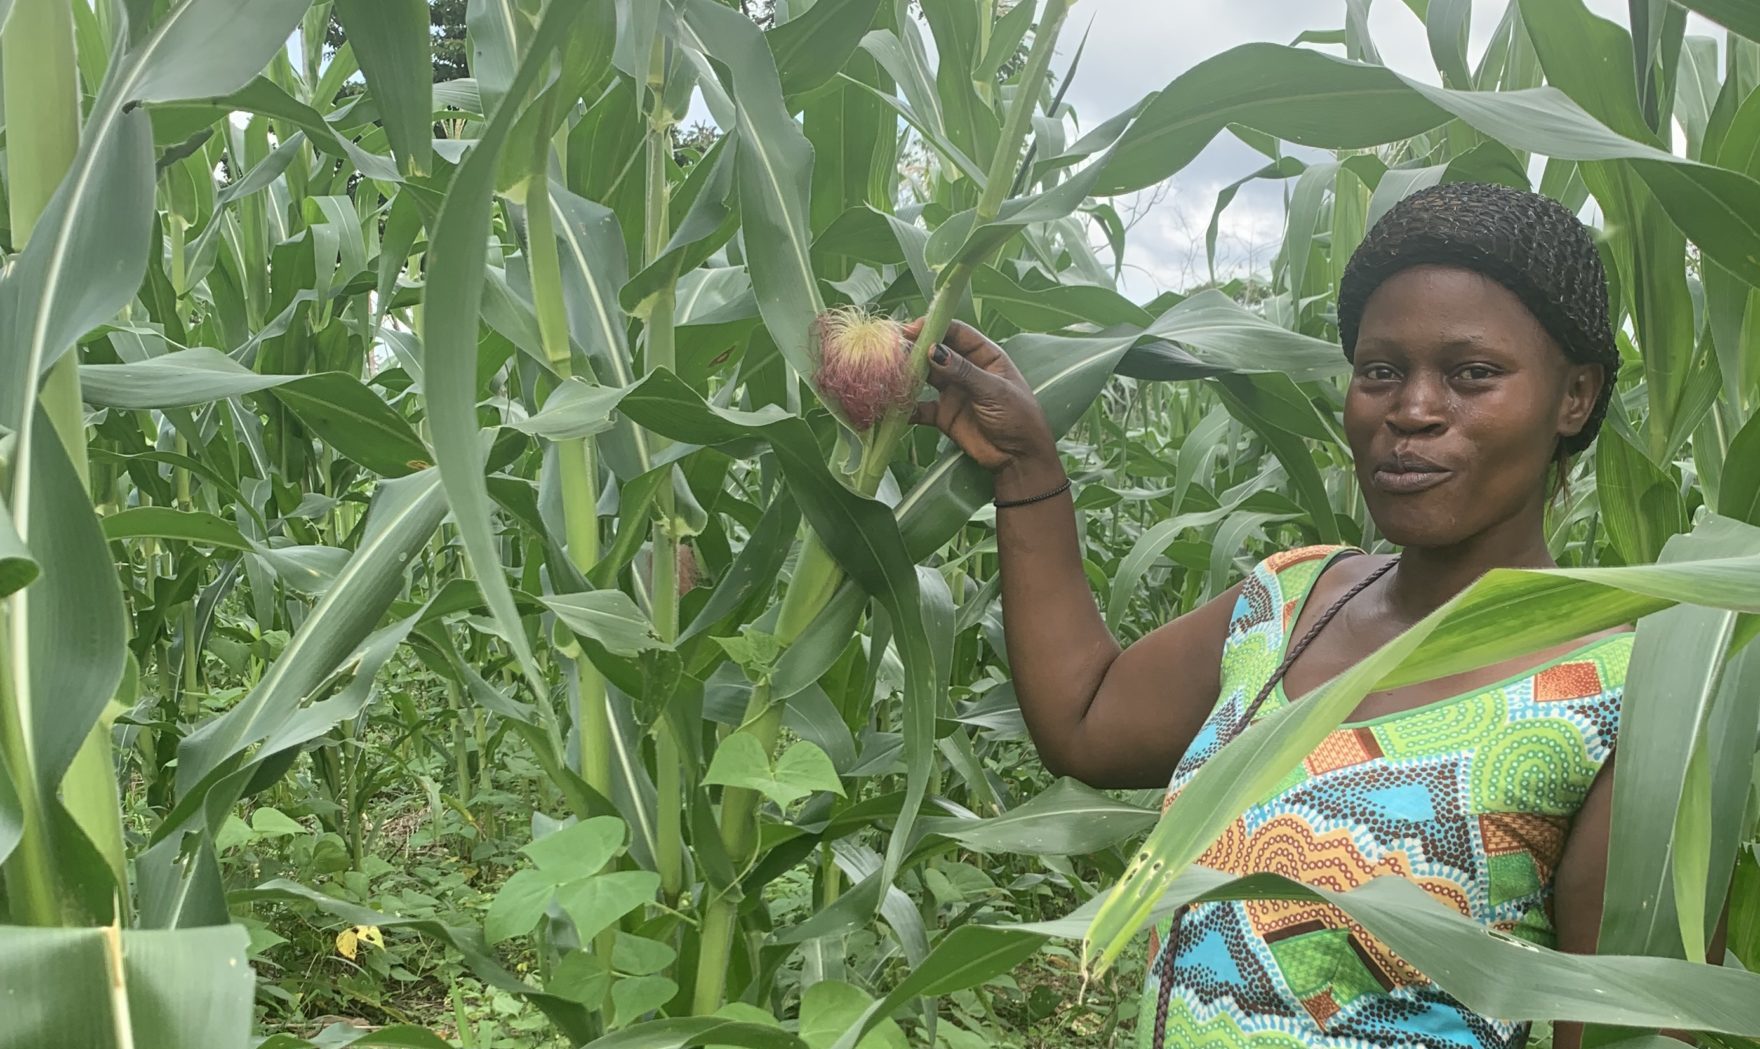 Woman standing among corn plants, Cameroon.